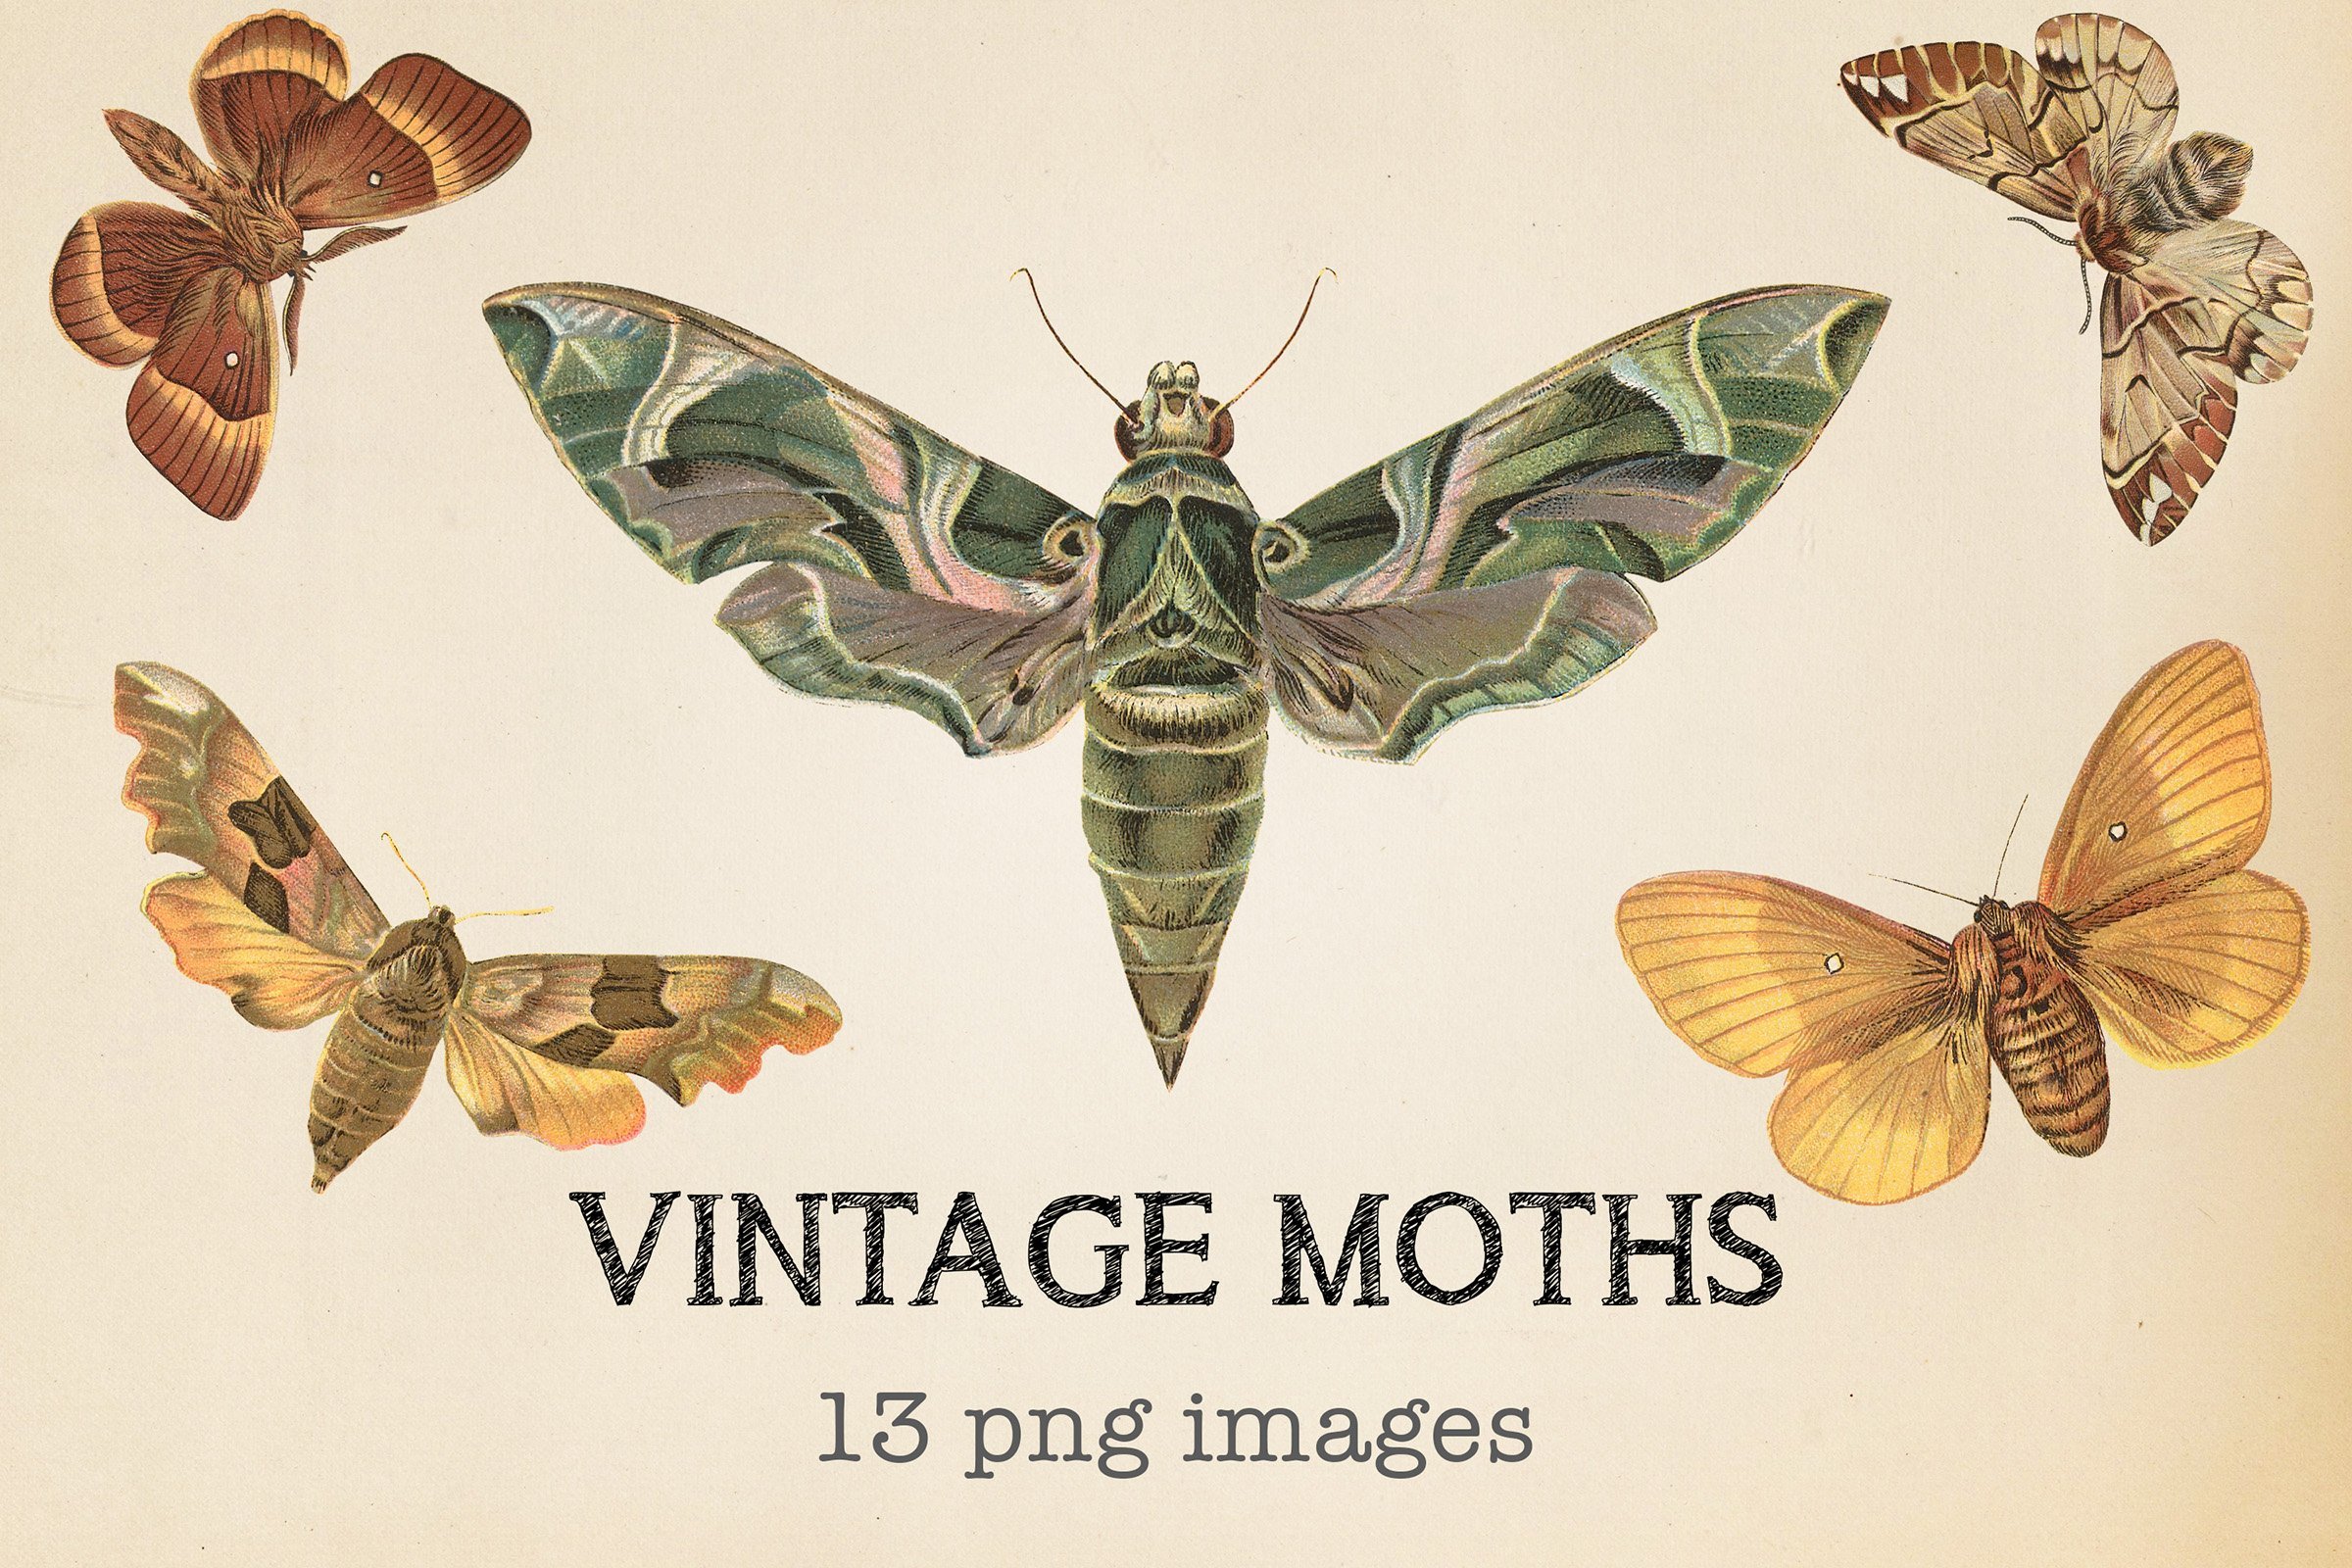 Vintage Moths Clipart cover image.